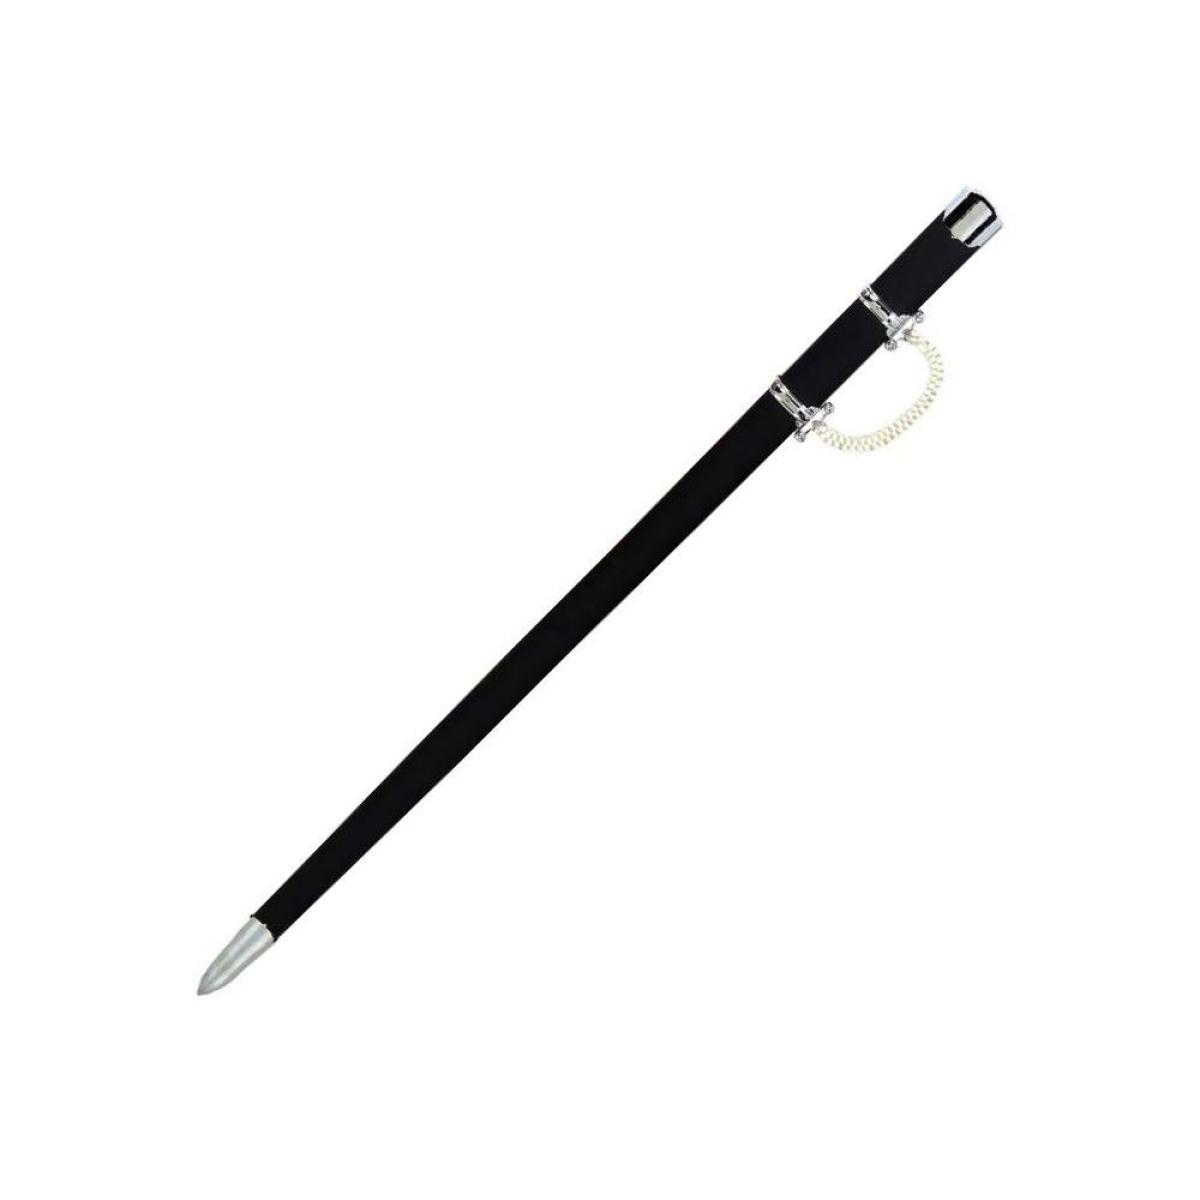 Tai Chi Sword with steel blade and scabbard black ➤ www.bokken-shop.de. Suitable for tai chi, tai chi chuan, tai chi. Your Tai Chi retailer!